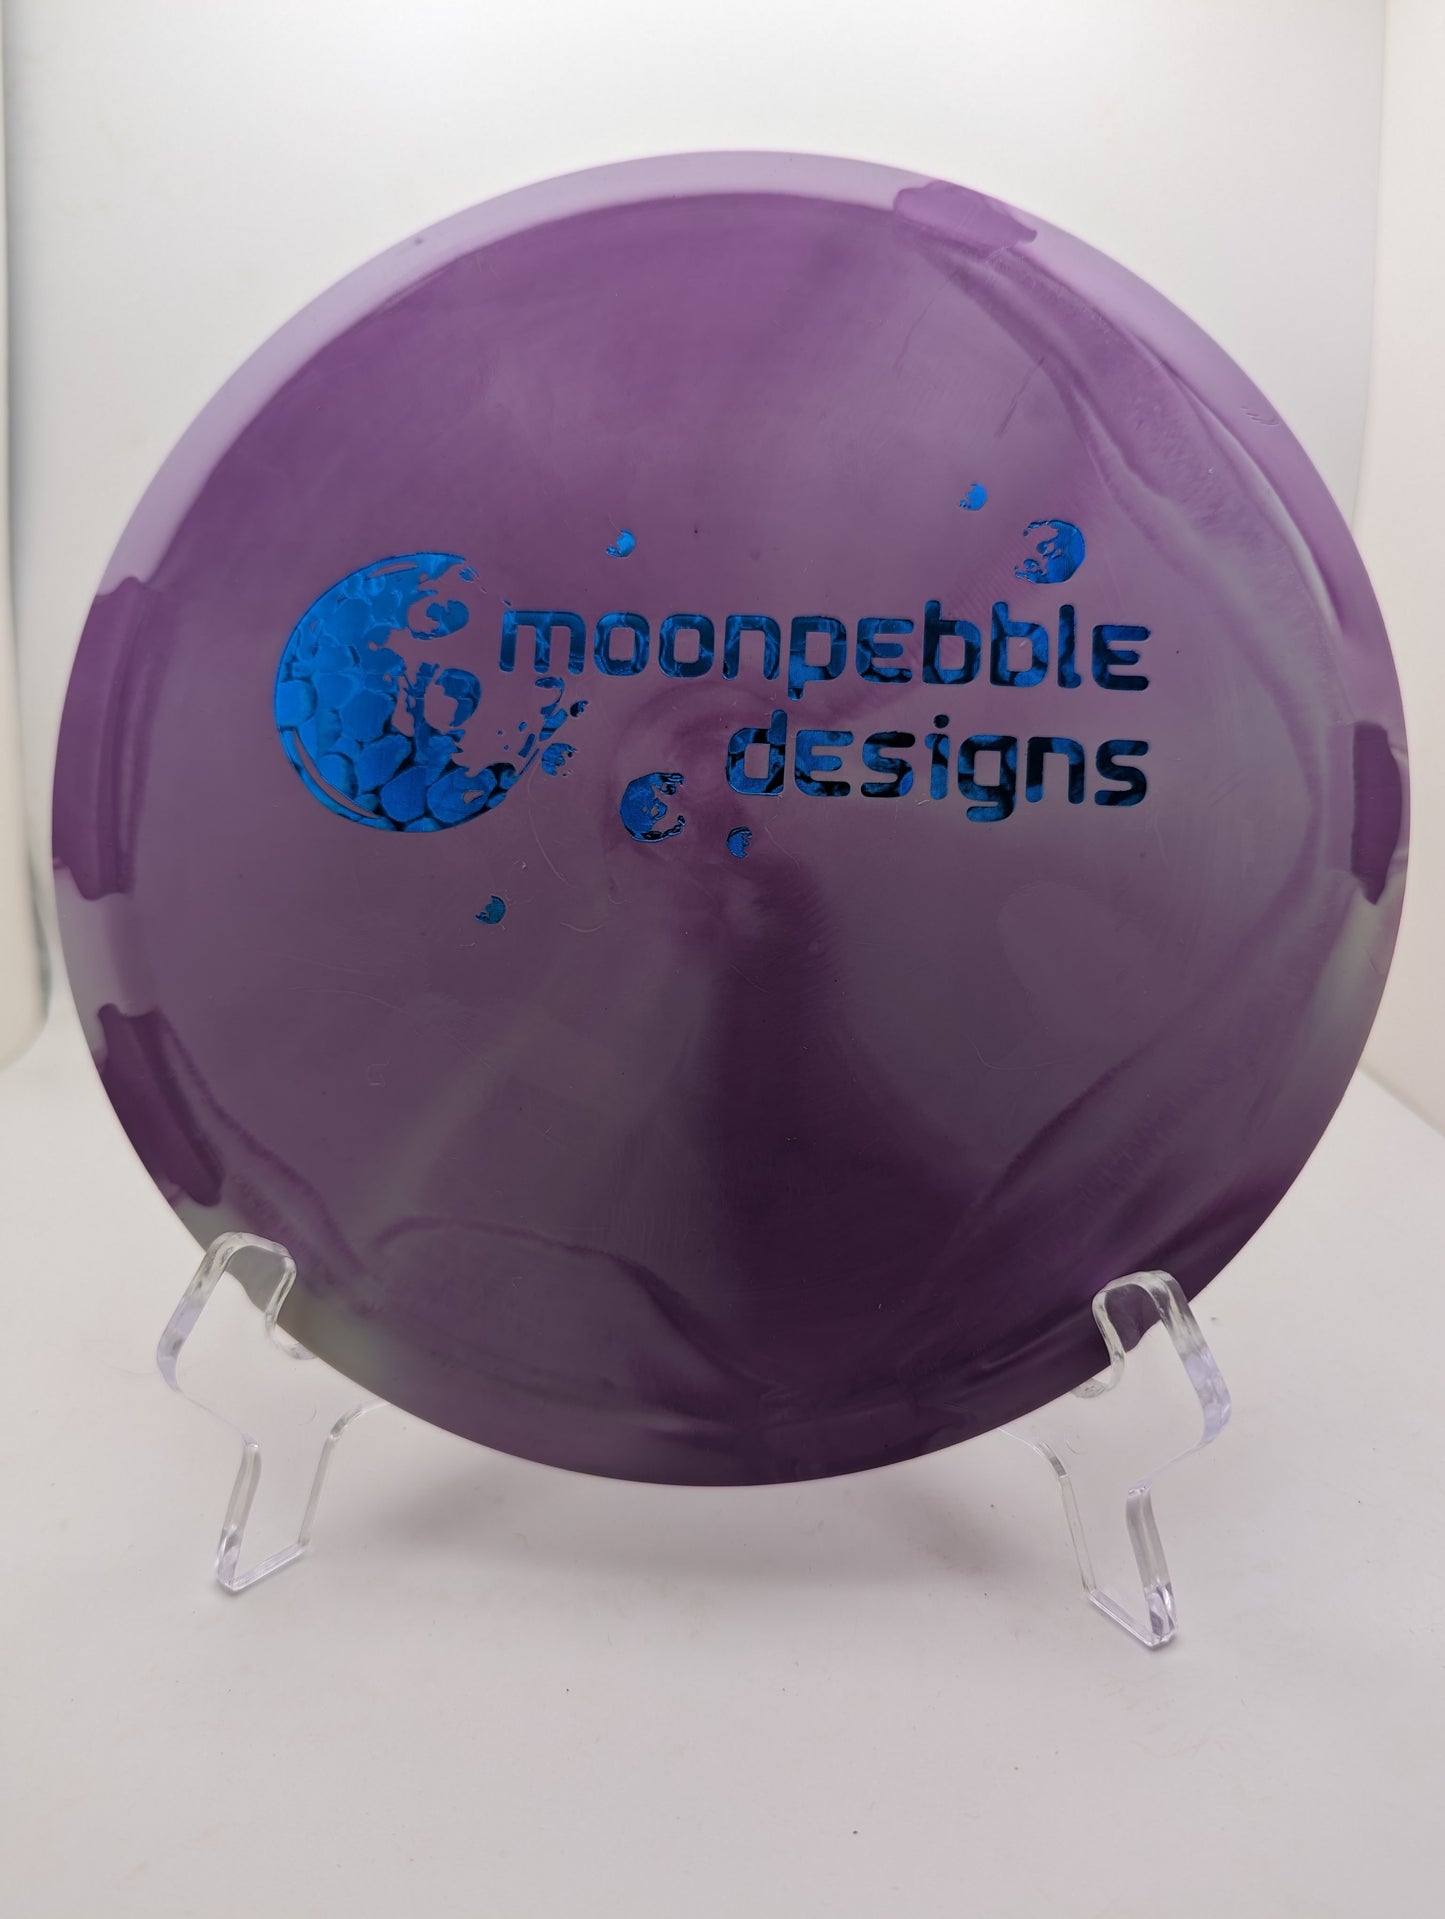 Lone Star Disc Delta 1 Middy - Moonpebble Designs